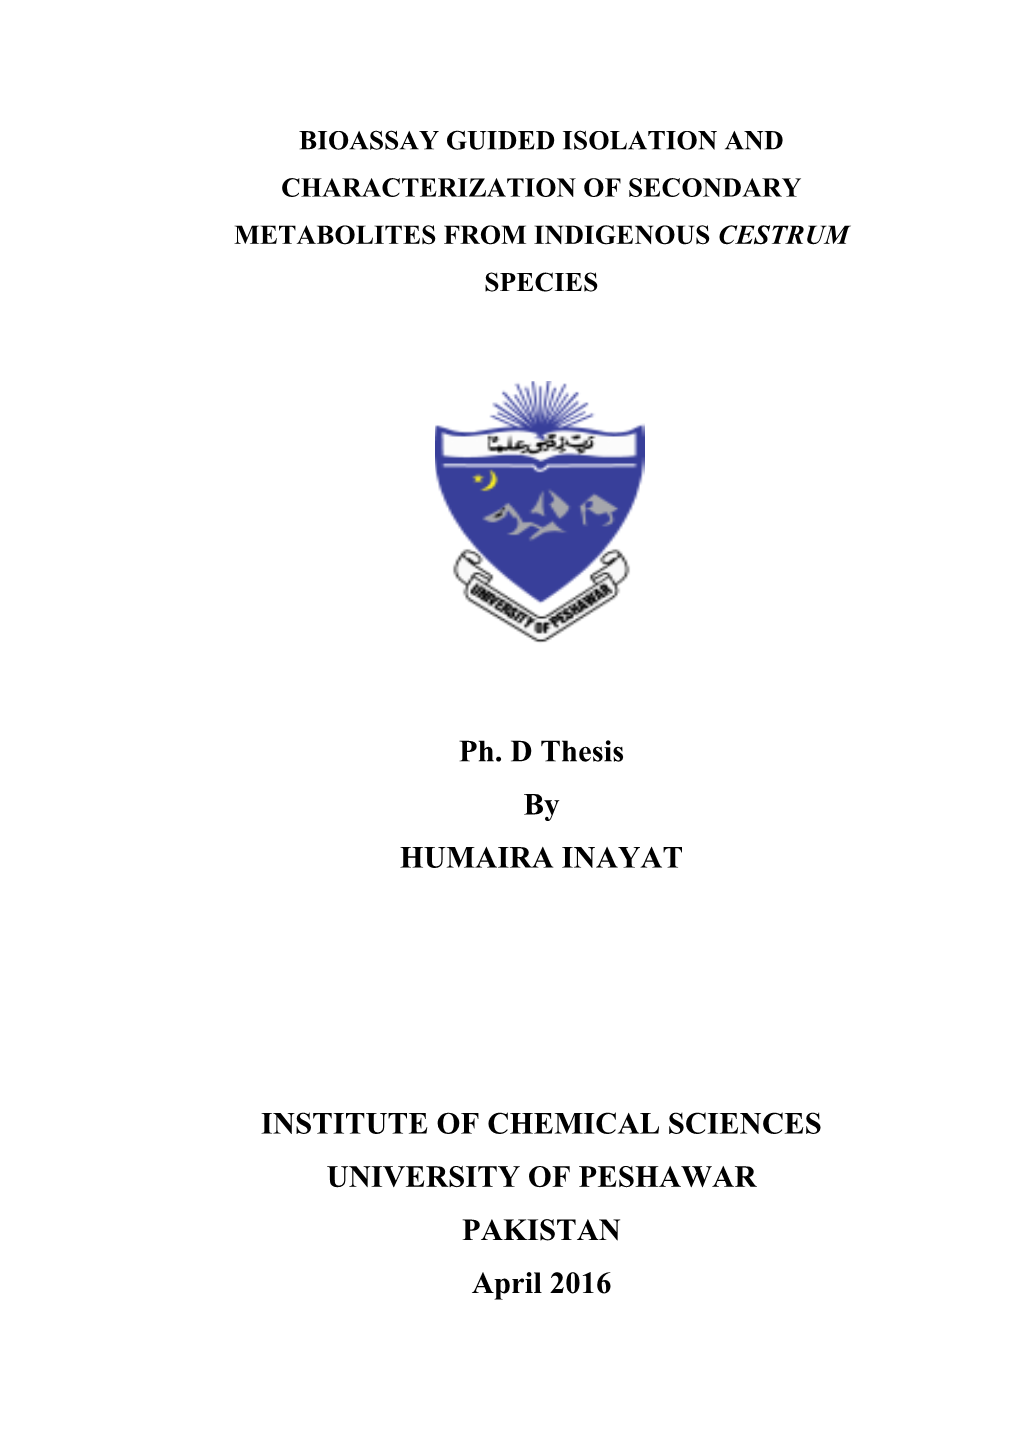 Ph. D Thesis by HUMAIRA INAYAT INSTITUTE of CHEMICAL SCIENCES UNIVERSITY of PESHAWAR PAKISTAN April 2016